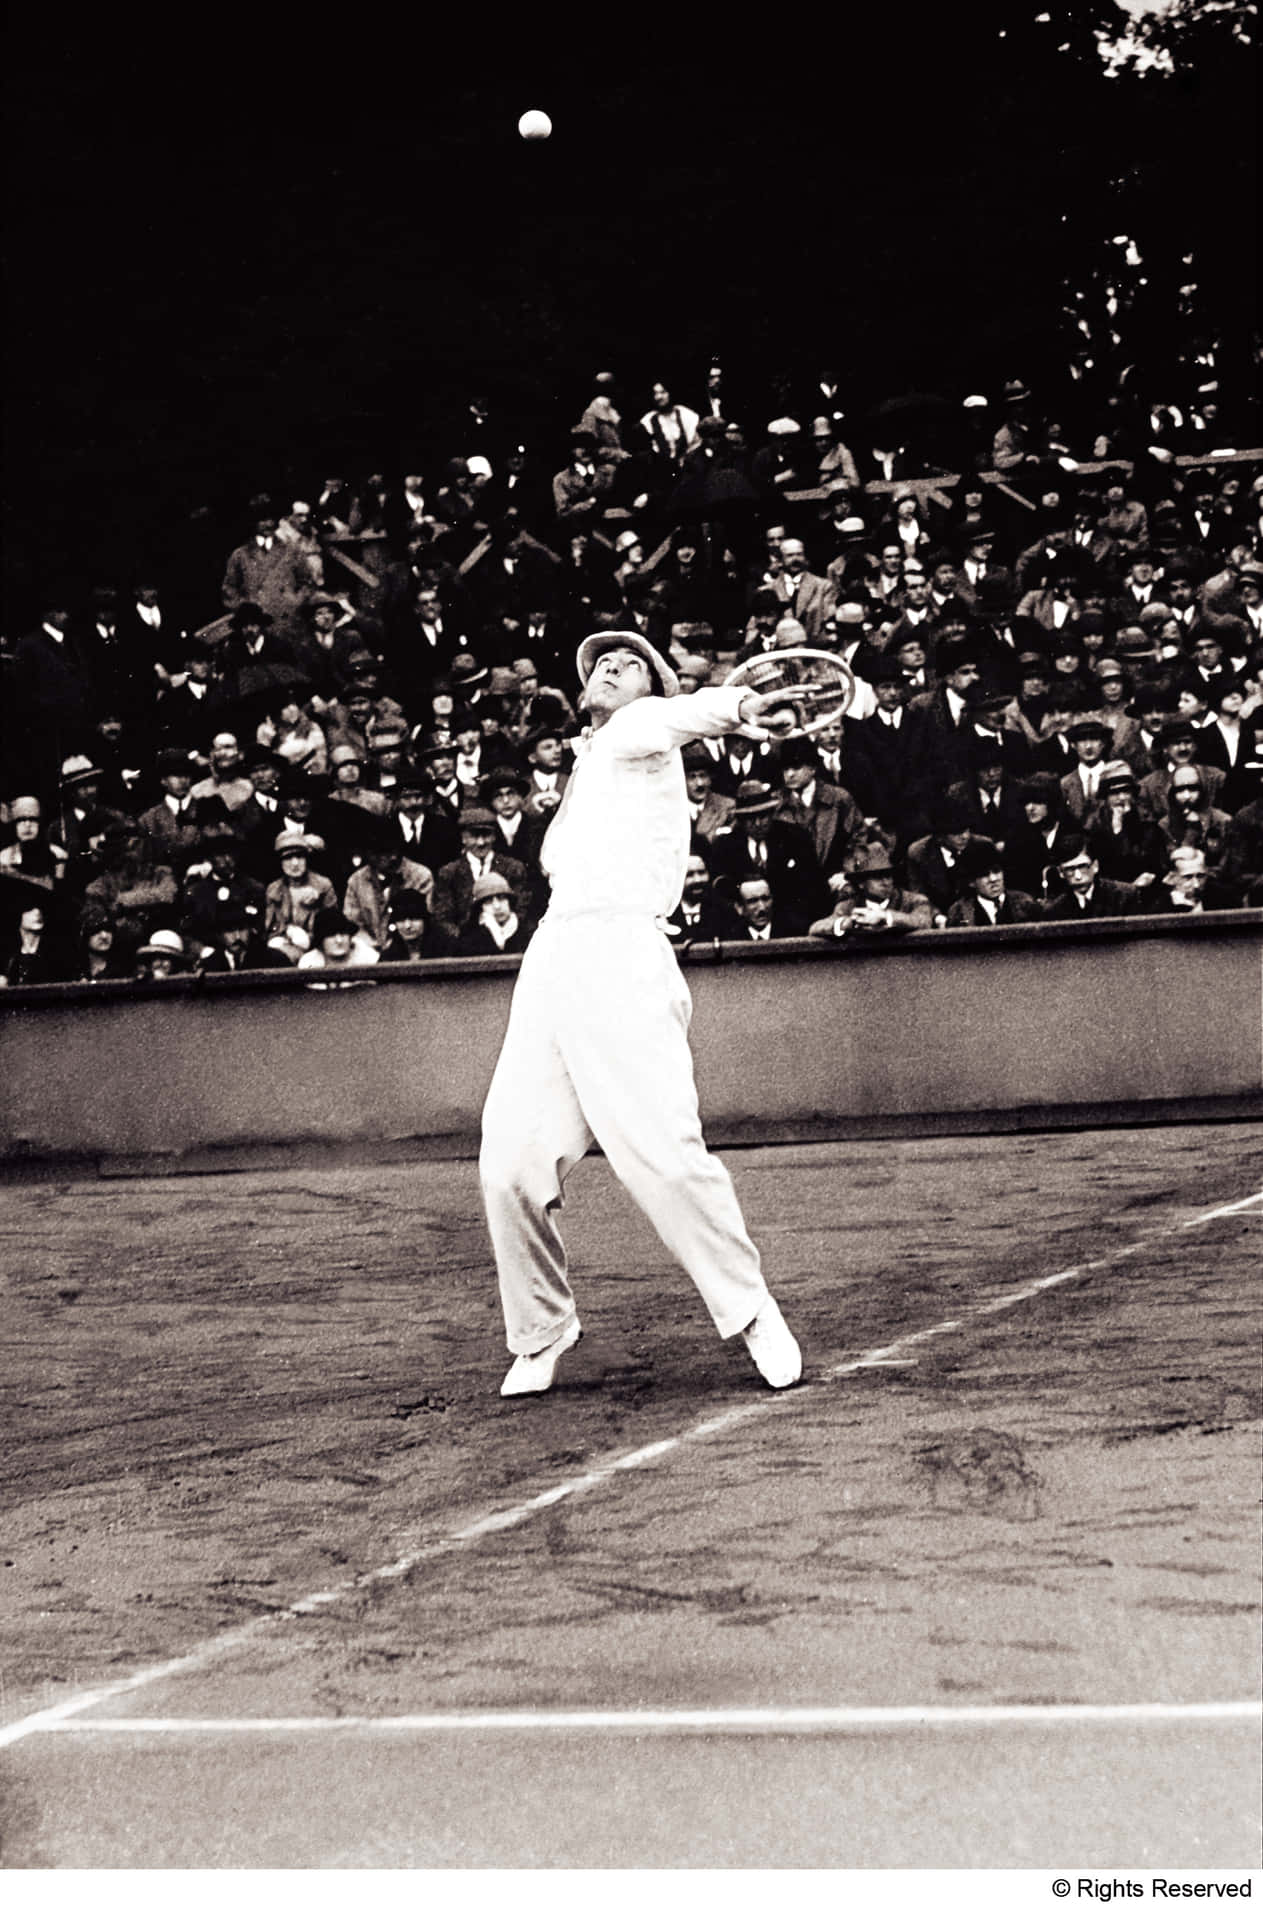 René Lacoste gracefully performing an overhead tennis shot. Wallpaper